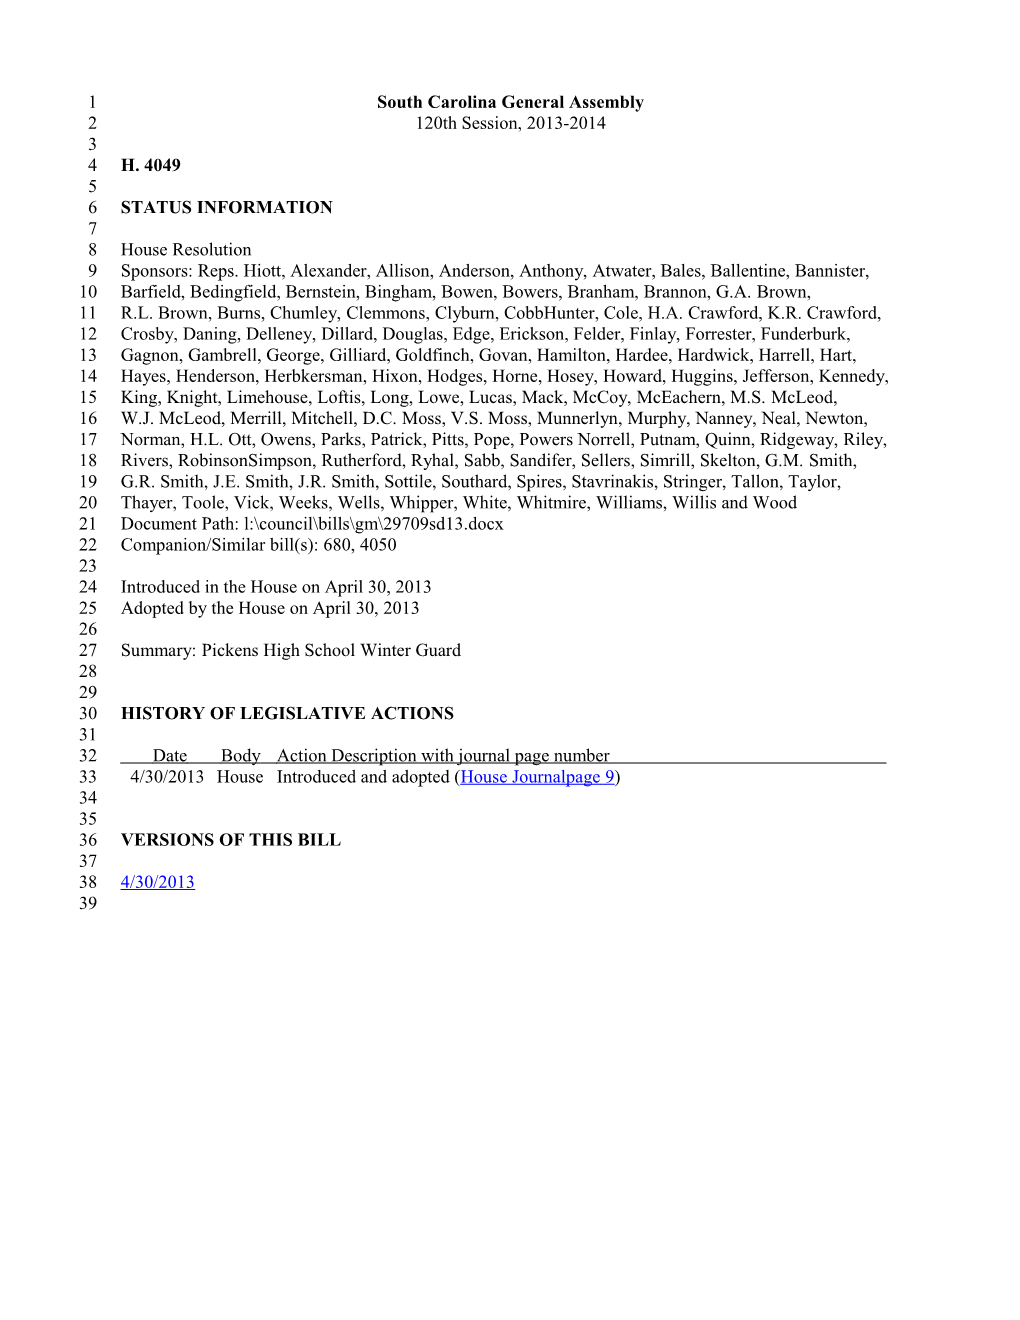 2013-2014 Bill 4049: Pickens High School Winter Guard - South Carolina Legislature Online